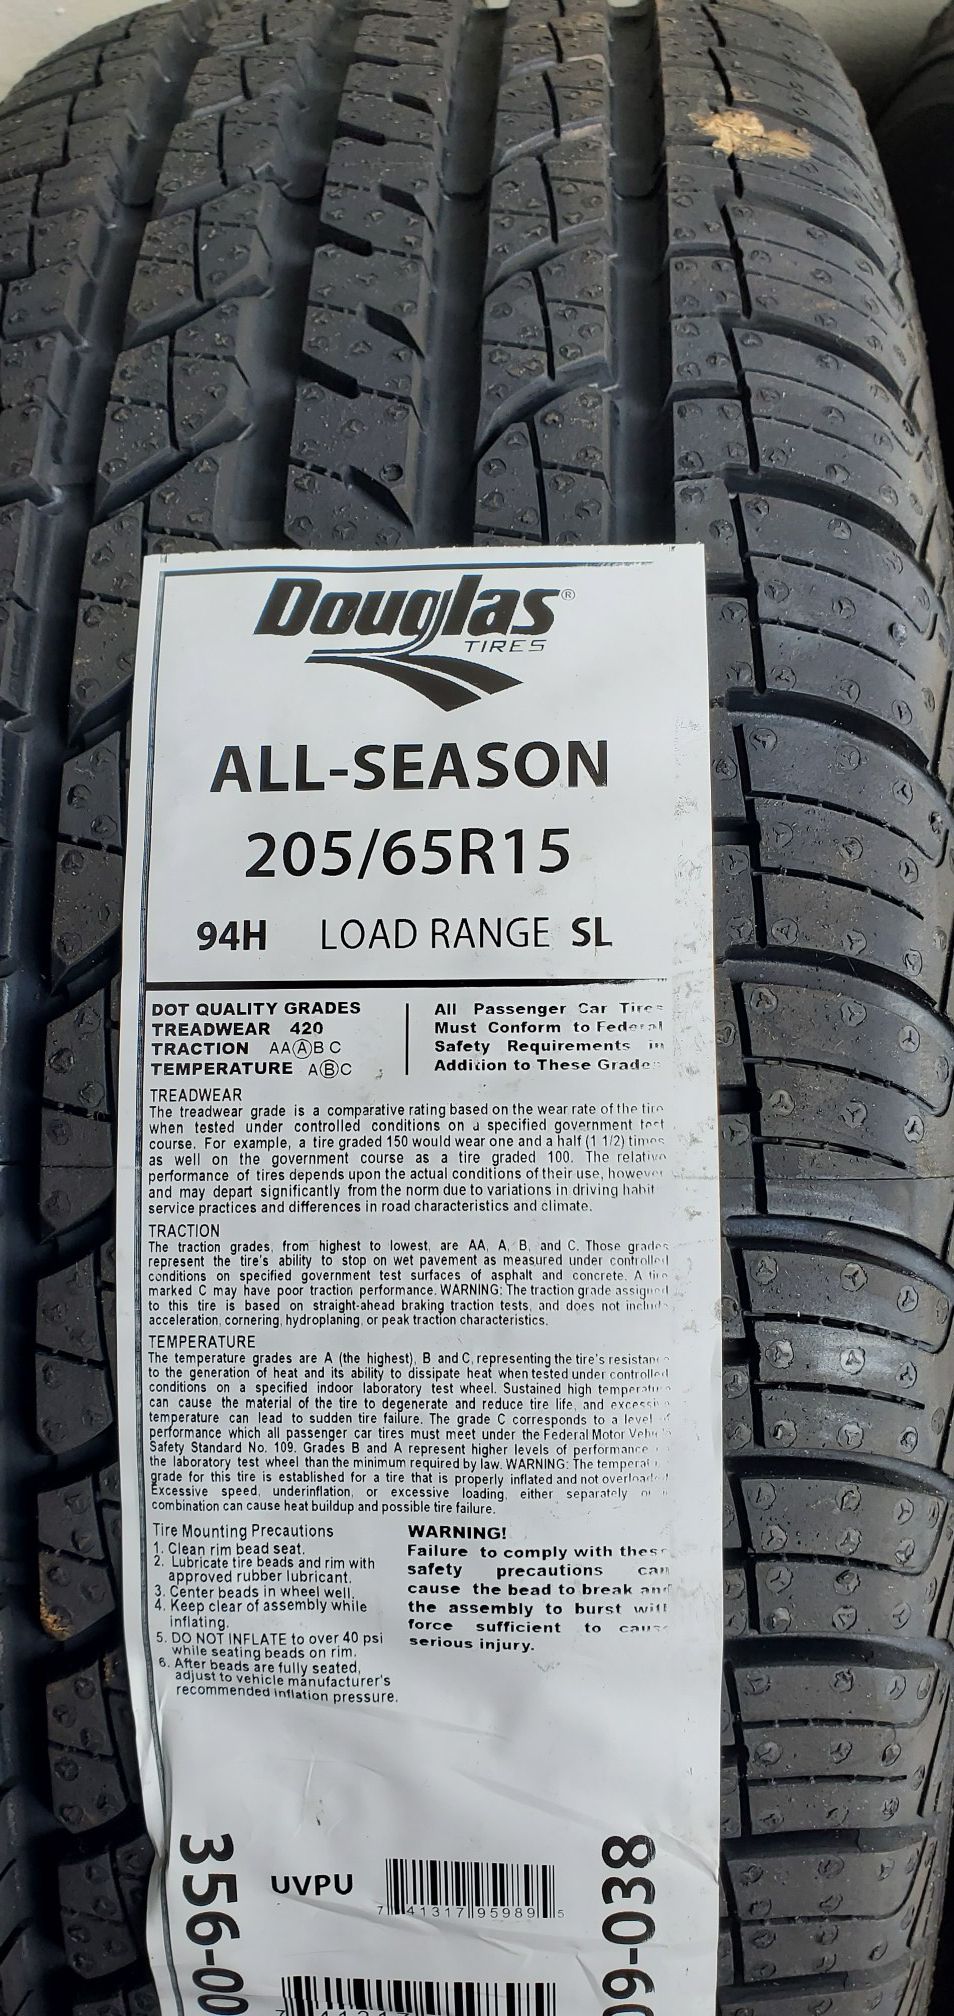 New! 3 Douglas All-Season Tire 205/65R15